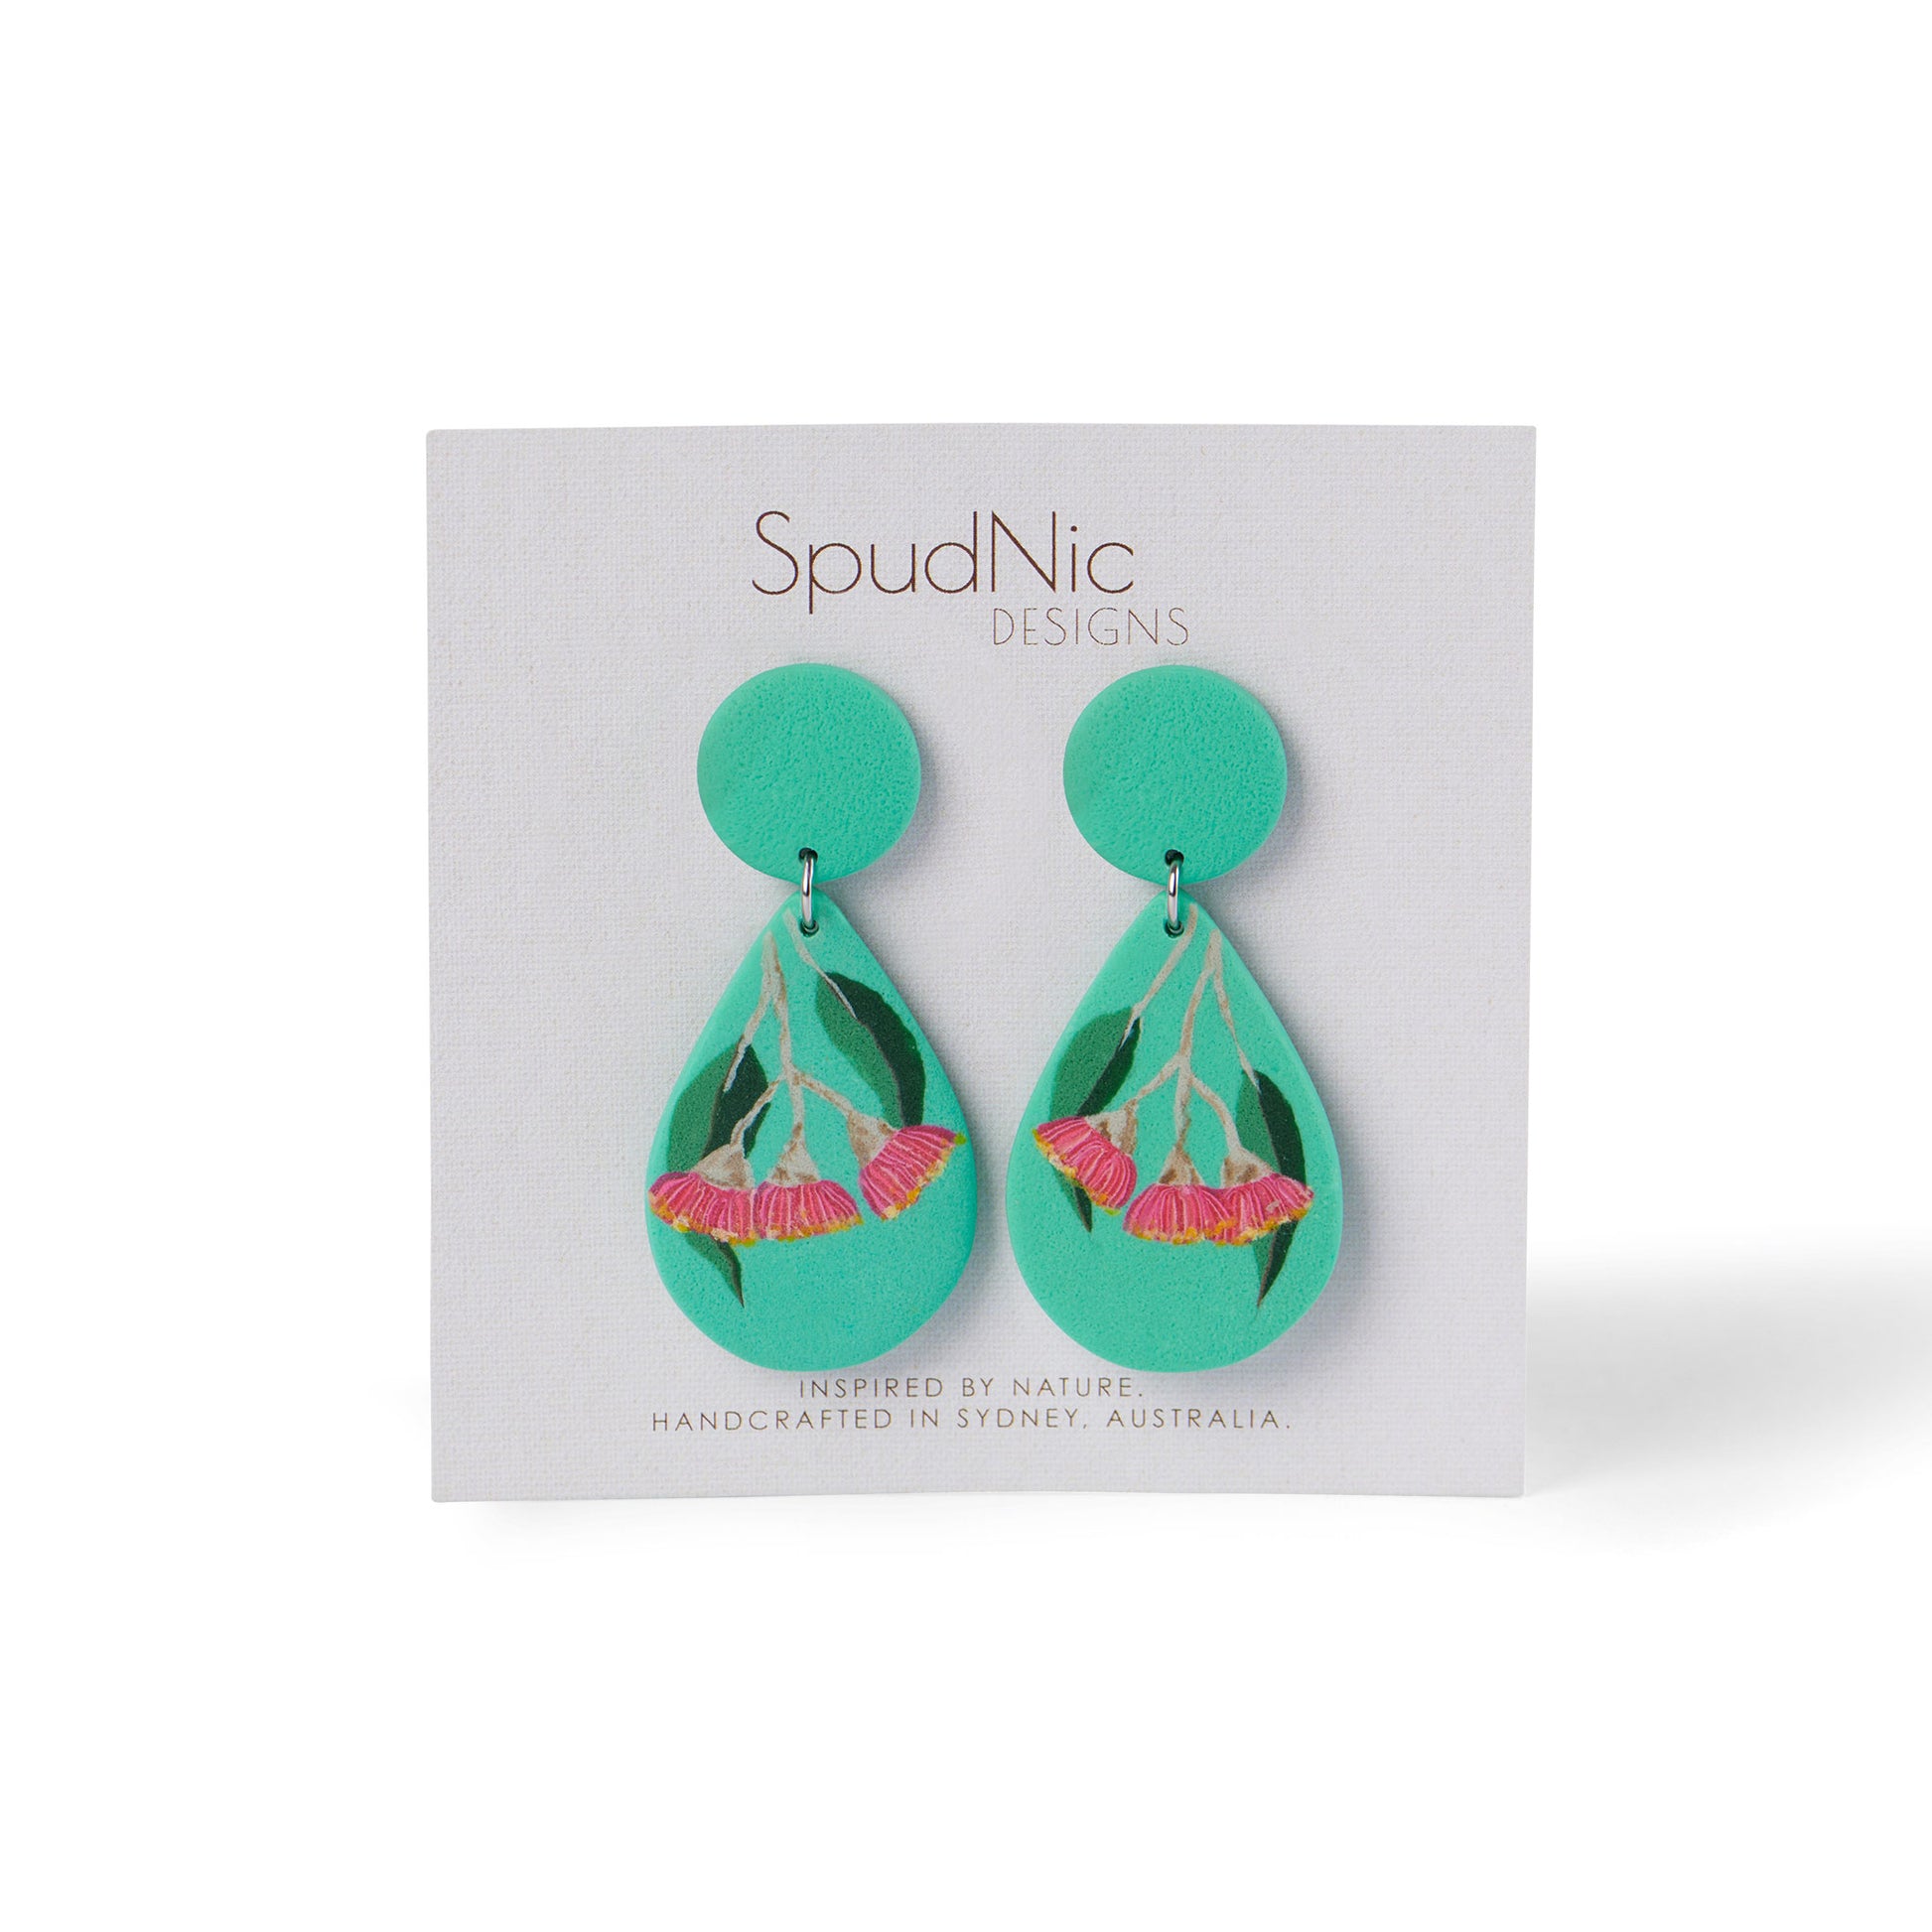 These beautifully handmade earrings showcase the Australian native pink flowering gum.